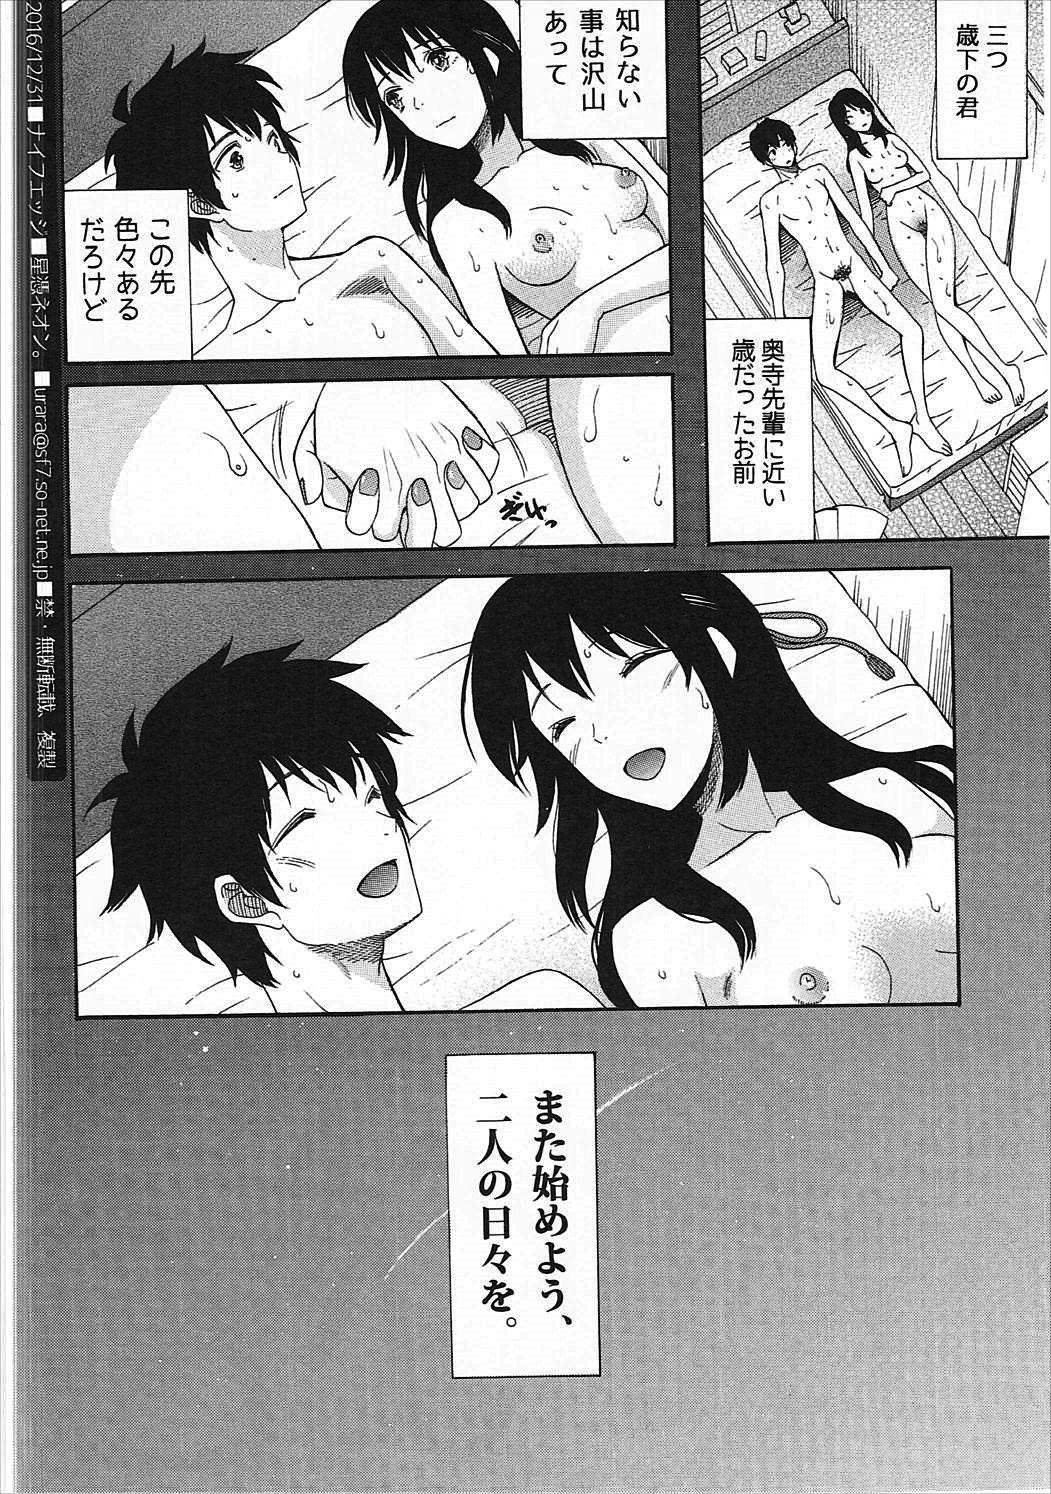 Facefuck Futari no Hibi o. - Kimi no na wa. Webcams - Page 17